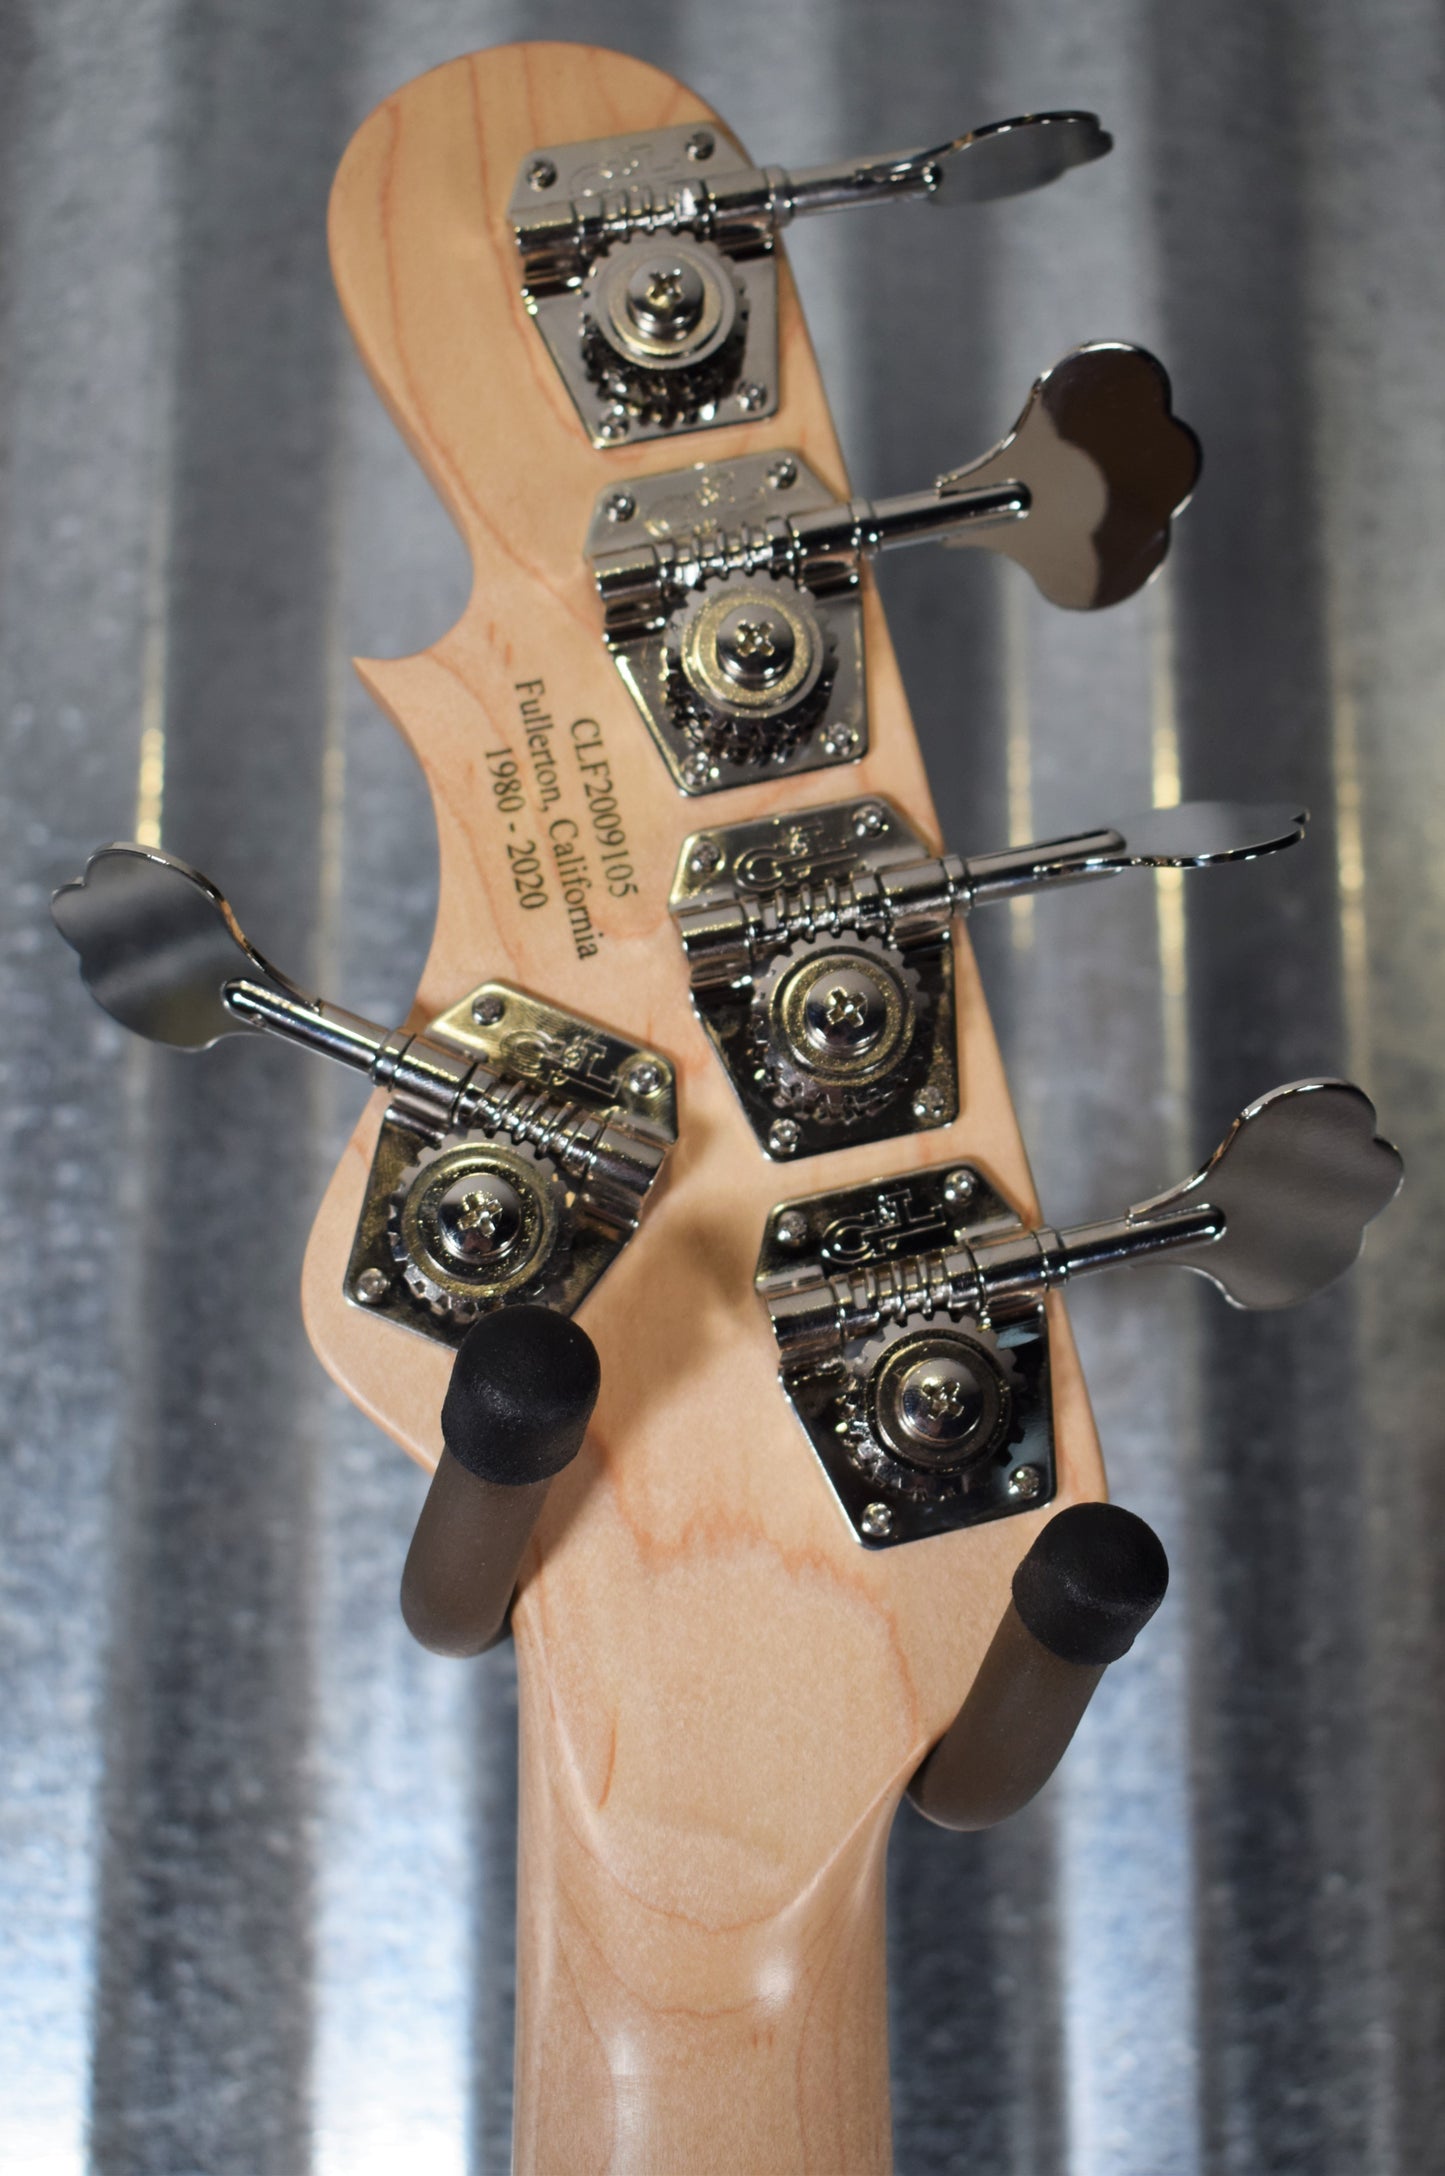 G&L USA Fullerton Kiloton 5 String Bass Silver Metallic & Case #9105